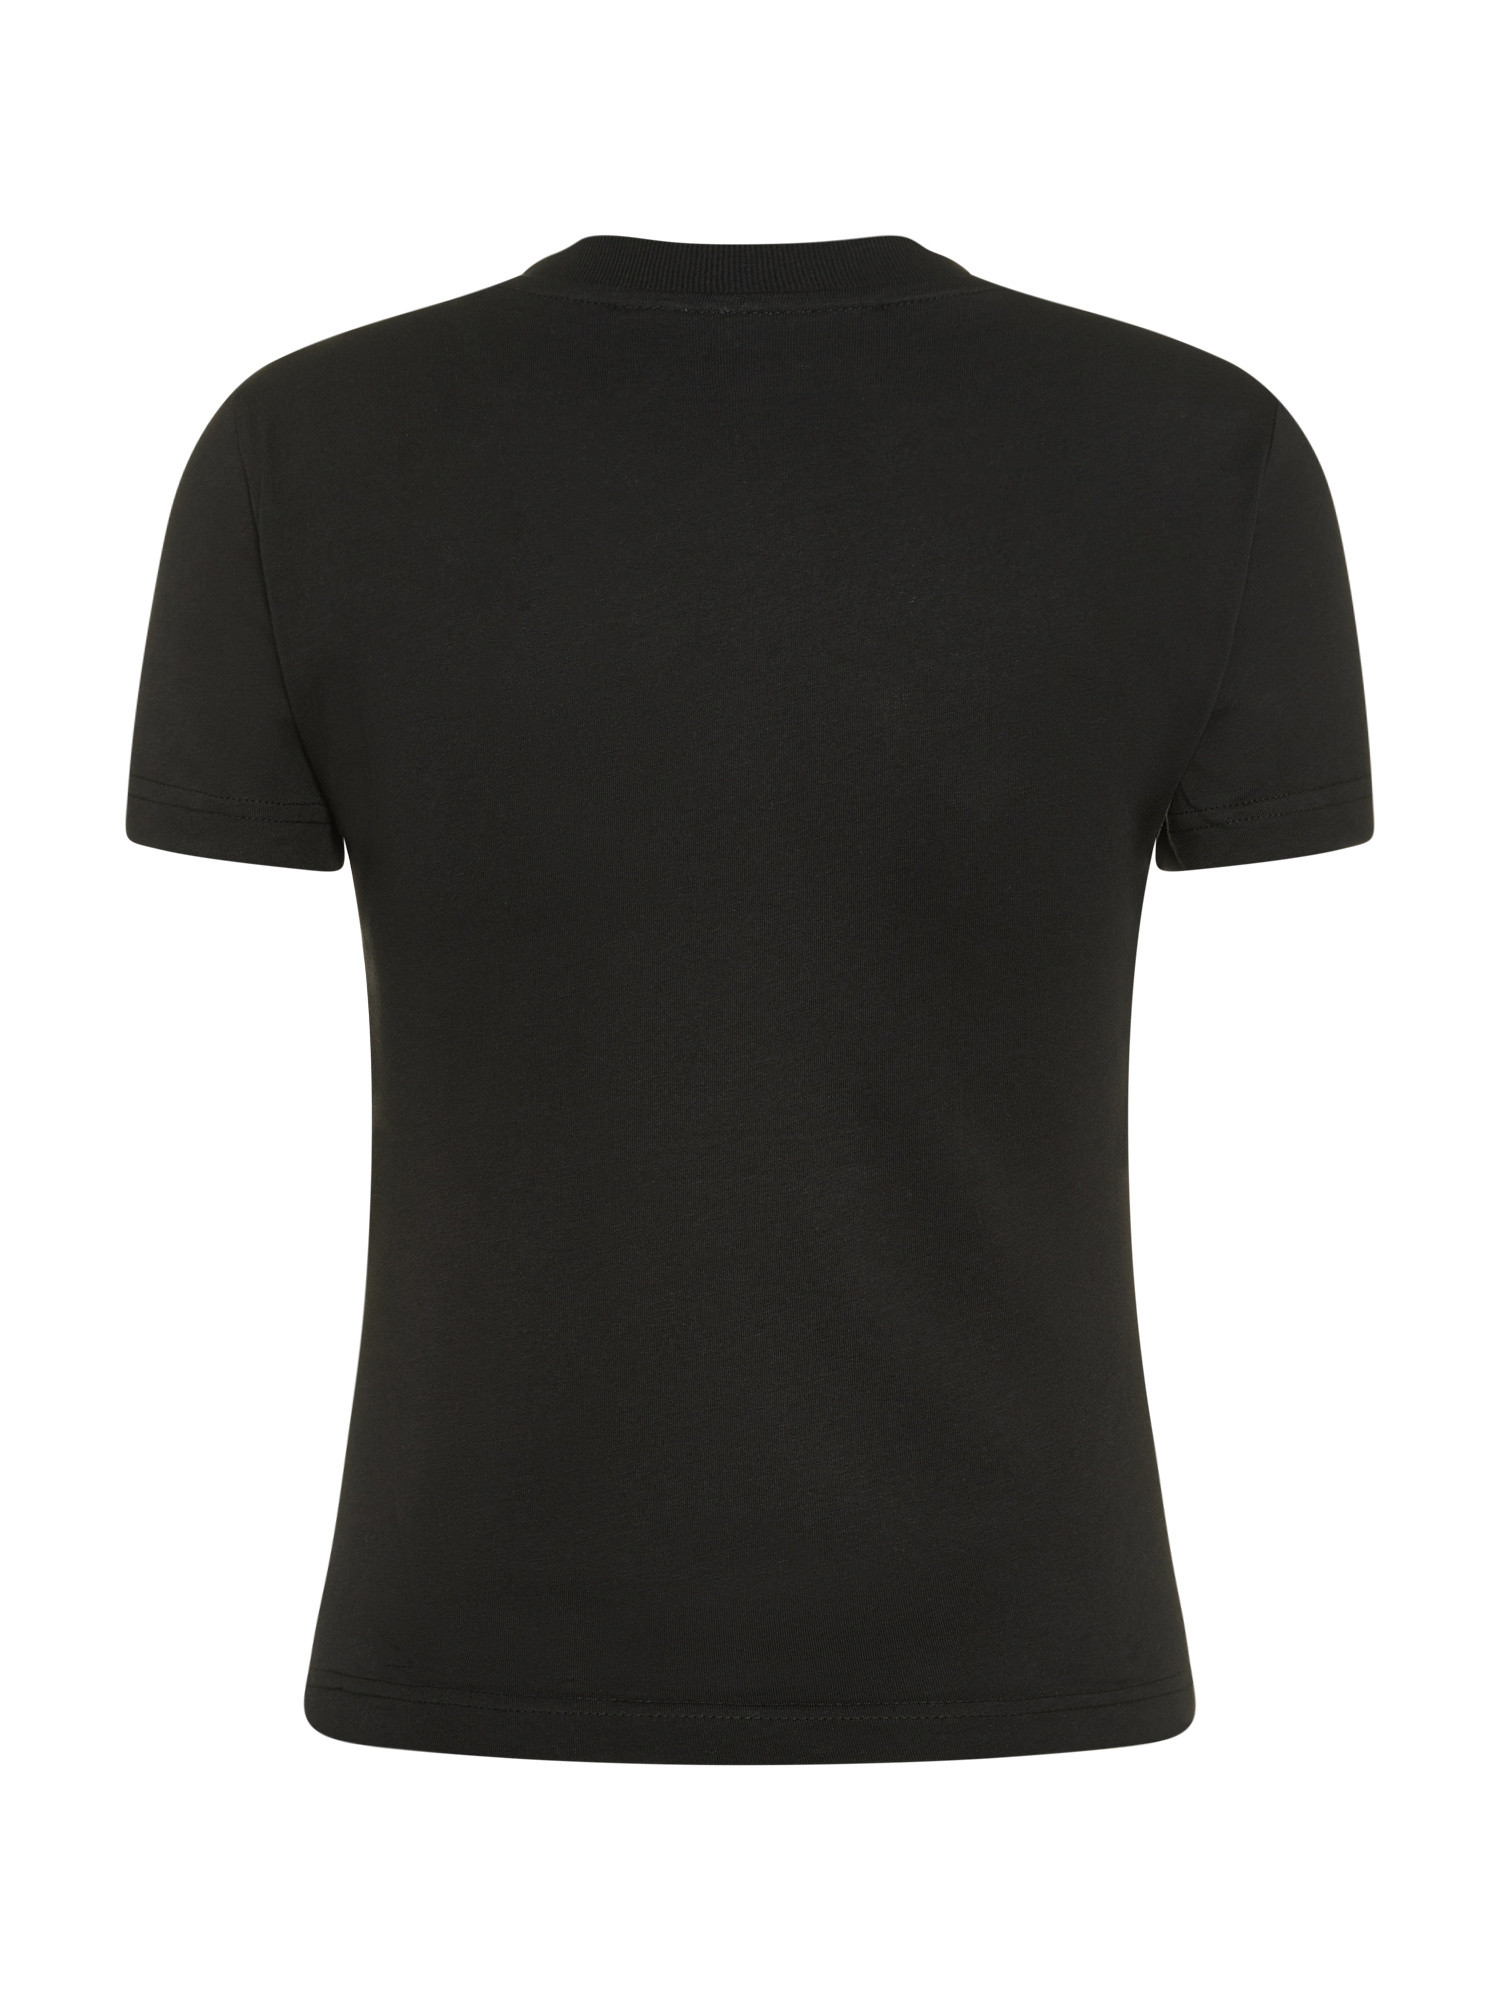 Chiara Ferragni - Eyestar rhinestone logo T-shirt, Black, large image number 1